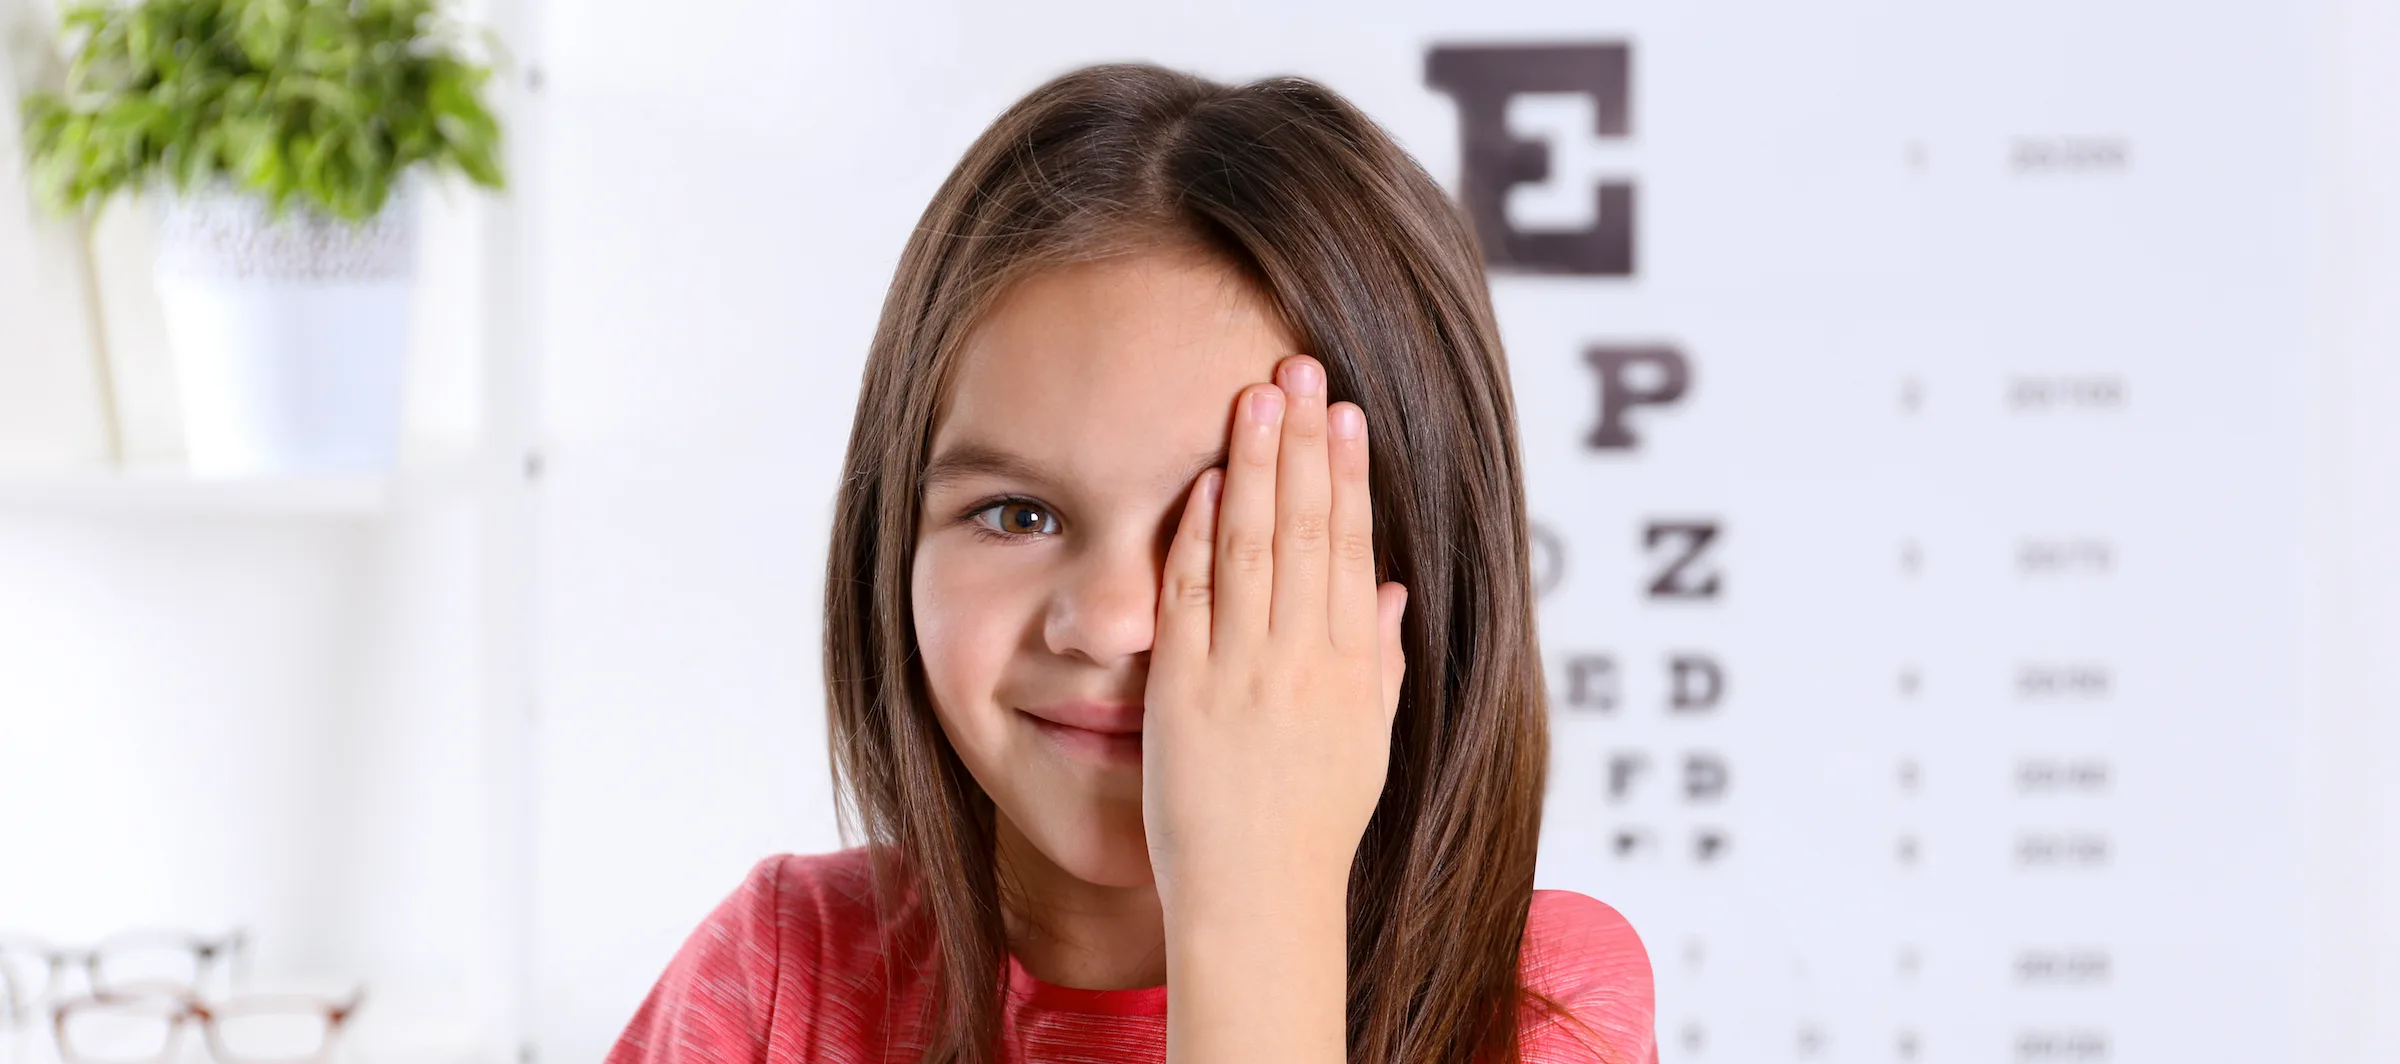 Young girl getting an eye exam